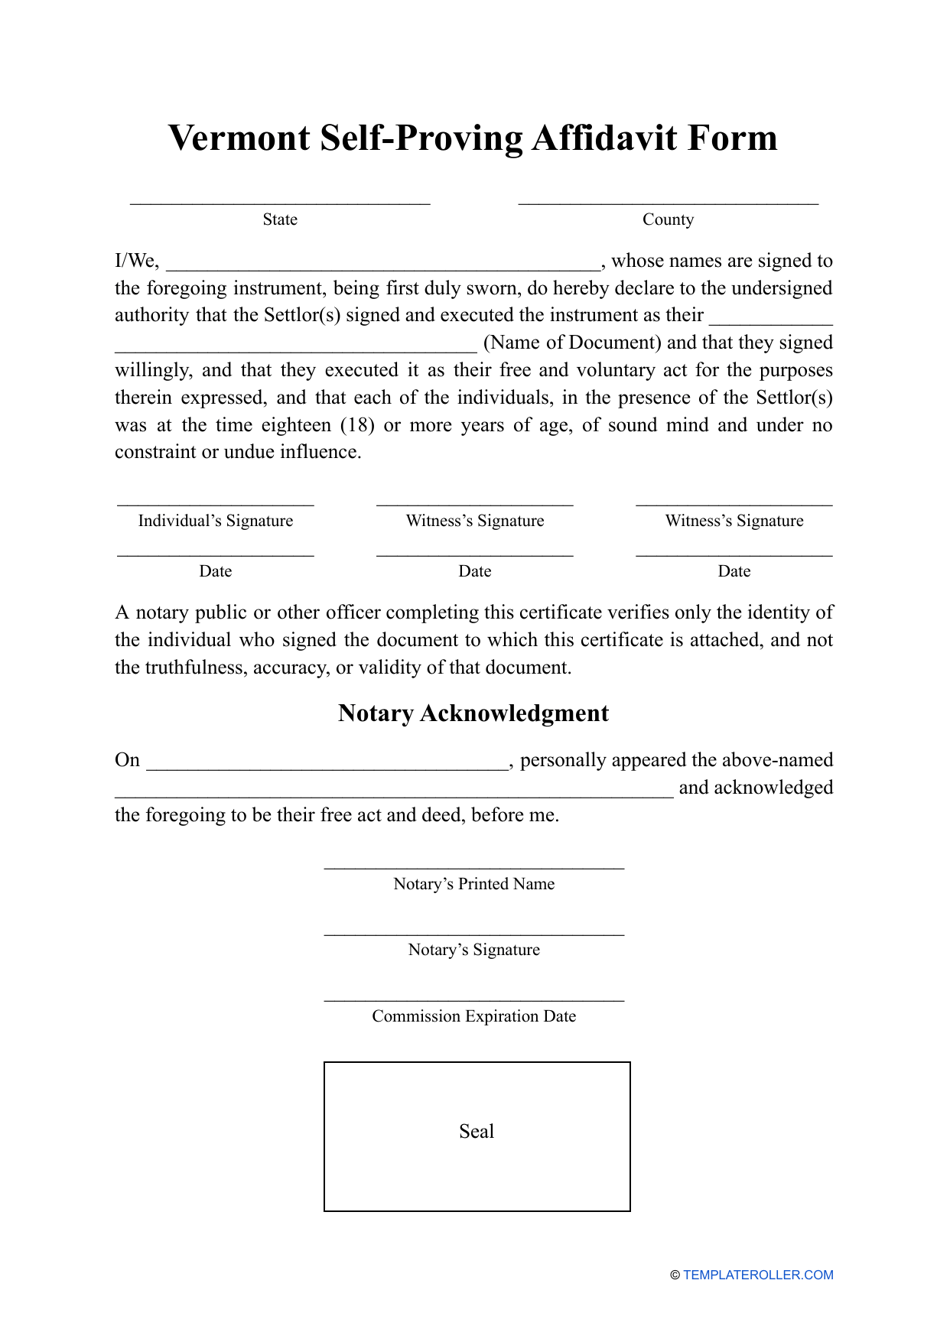 Self-proving Affidavit Form - Vermont, Page 1